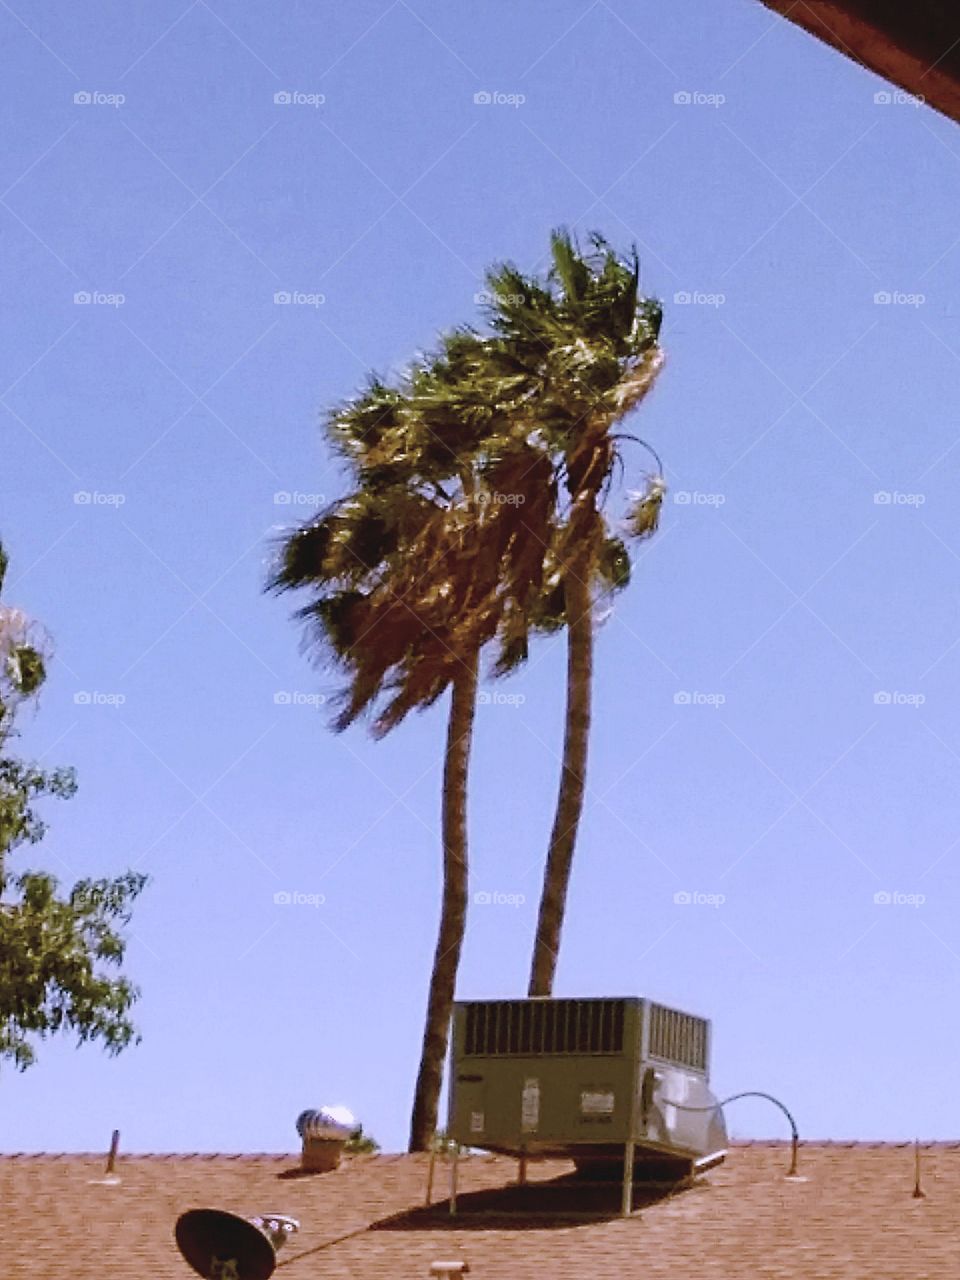 The tallest palms